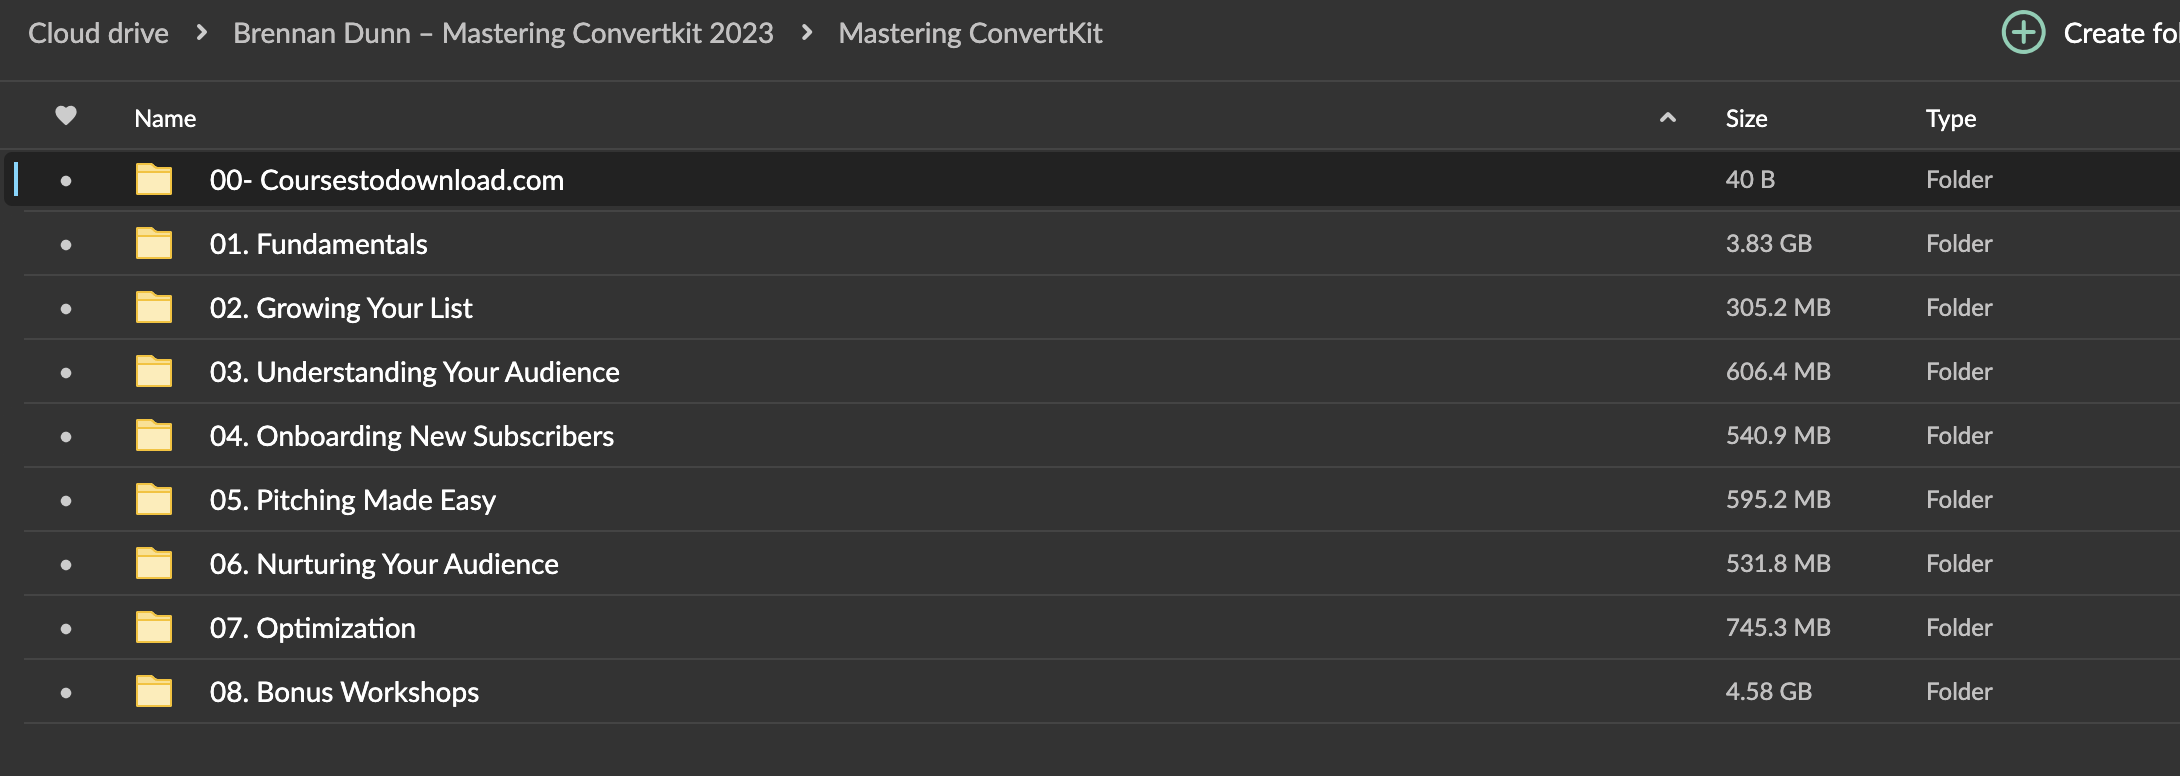 Brennan Dunn – Mastering Convertkit 2023 Download